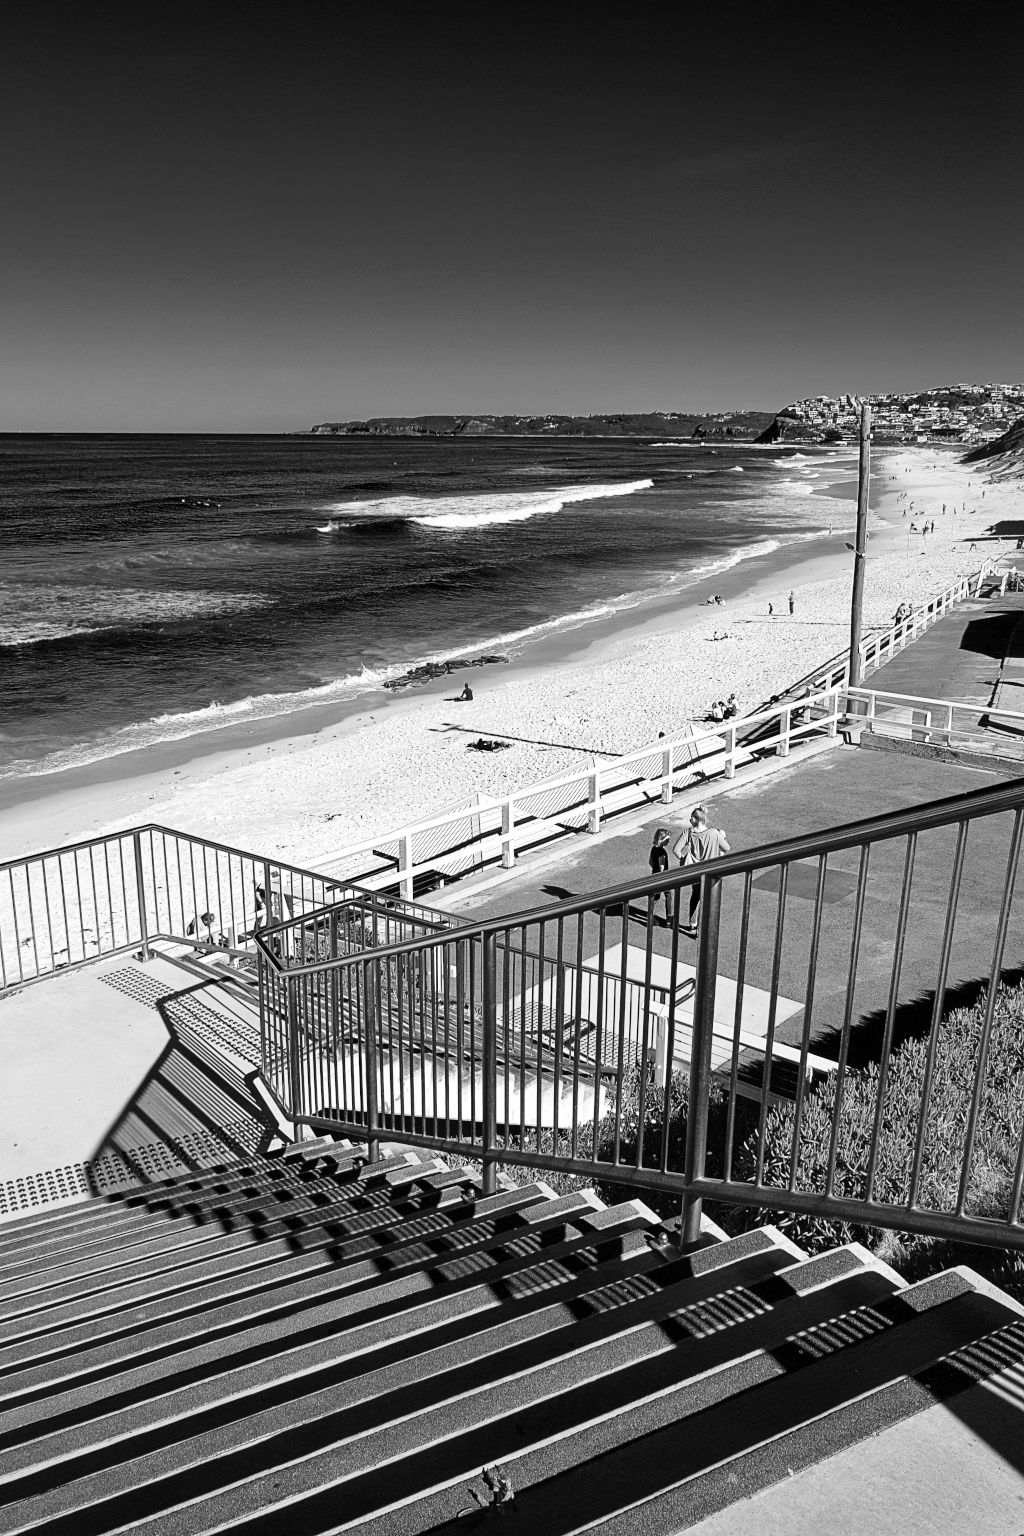 Stair way - Bar Beach, Newcastle NSW